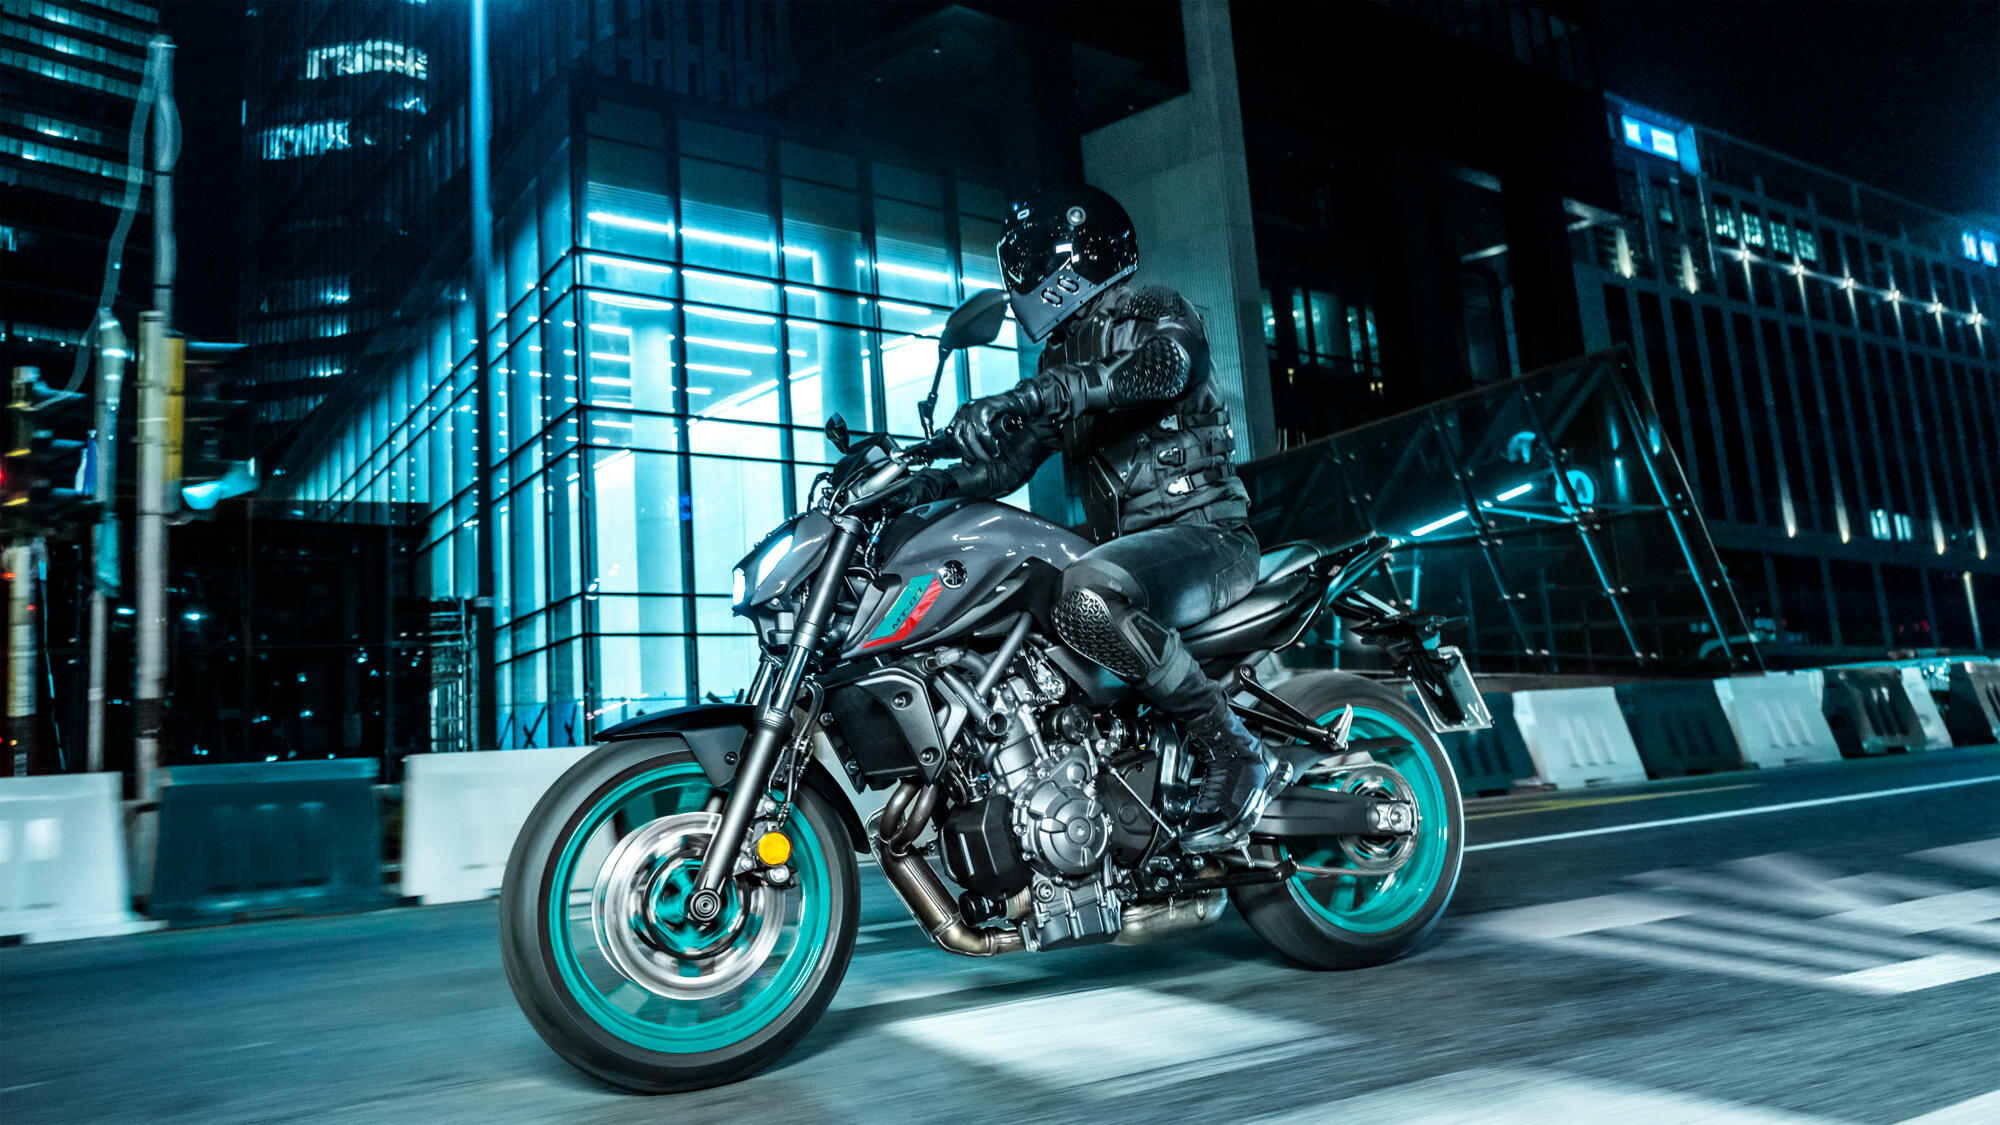 MT-07 - Motorcycles - Yamaha Motor